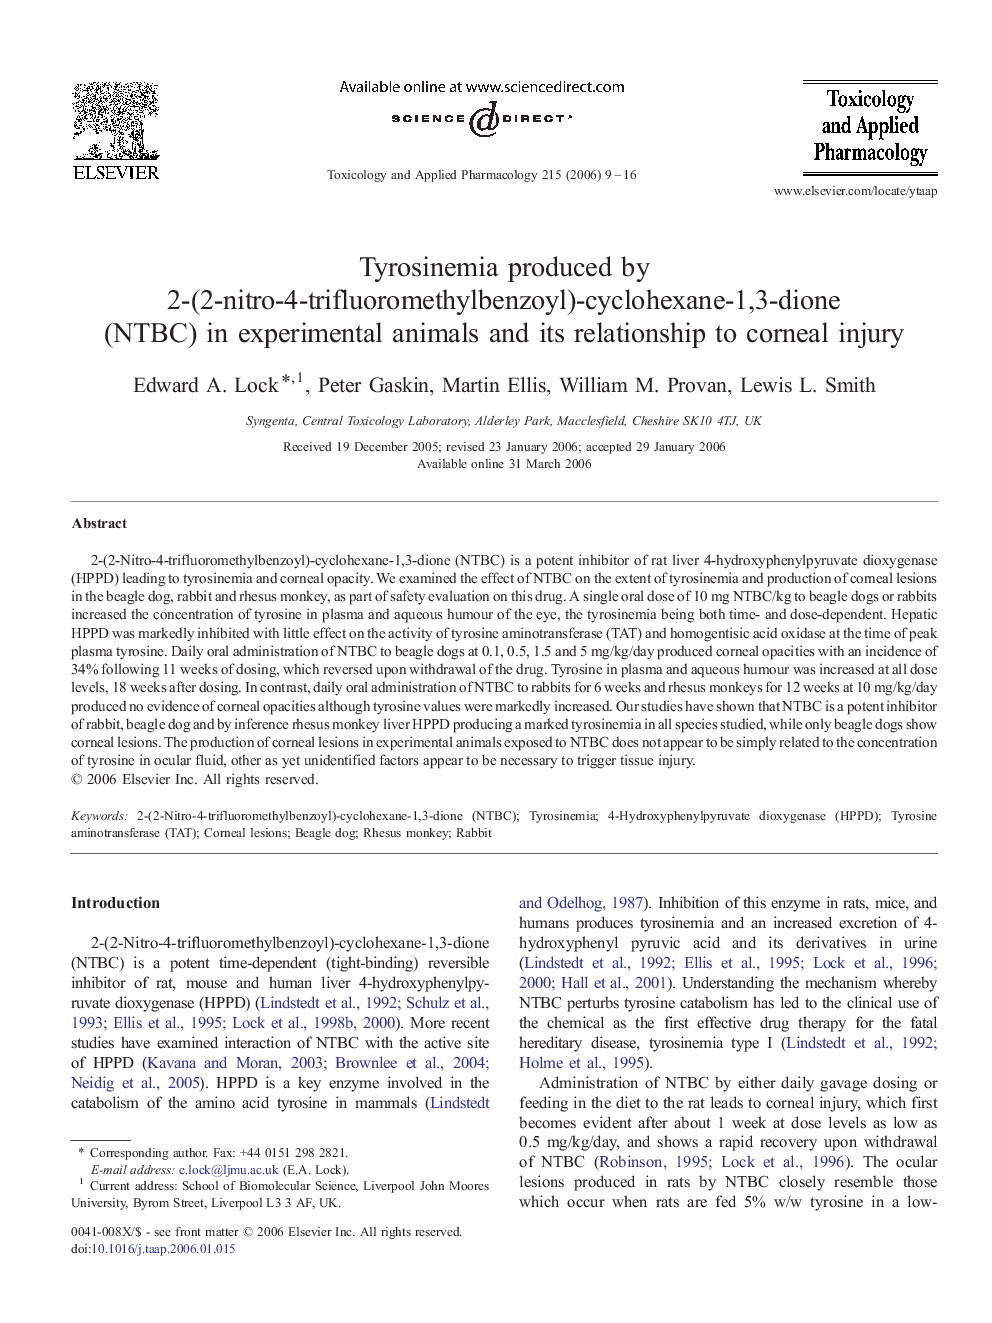 Tyrosinemia produced by 2-(2-nitro-4-trifluoromethylbenzoyl)-cyclohexane-1,3-dione (NTBC) in experimental animals and its relationship to corneal injury